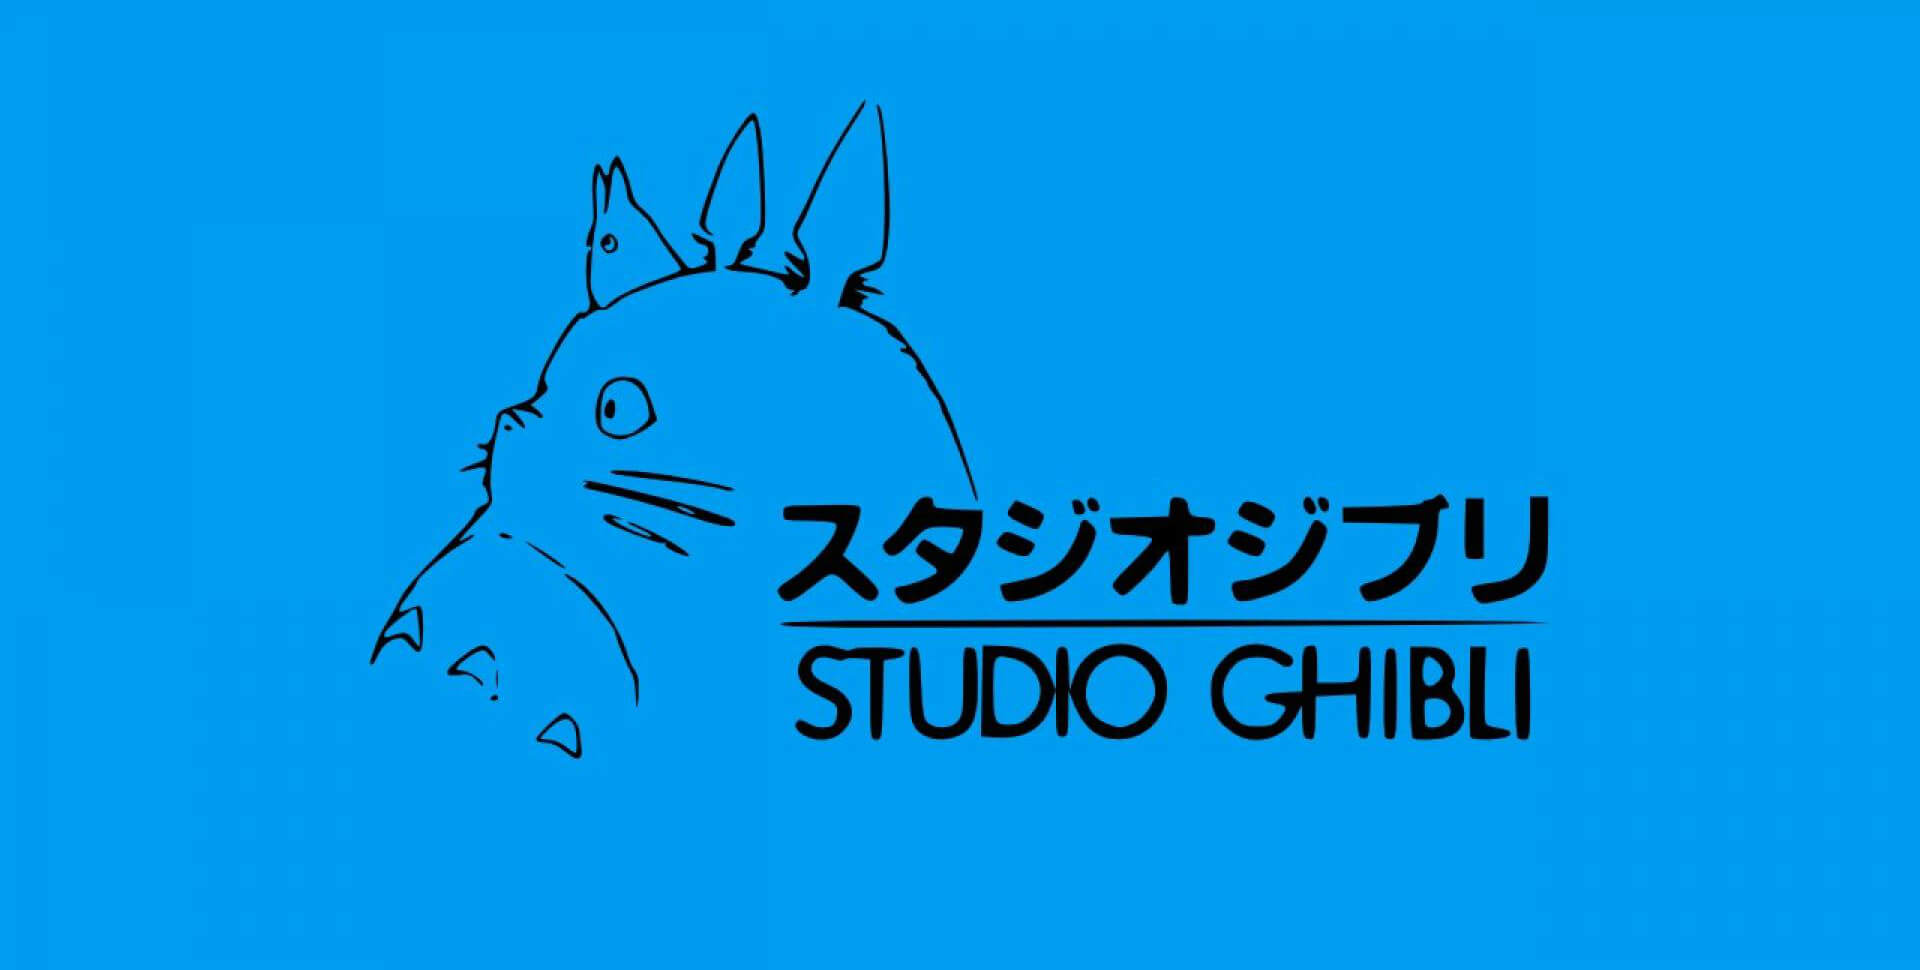 30 Top Images Best Ghibli Movies Ranked Reddit / Every Studio Ghibli Movie Ranked From Worst To Best - Page 10